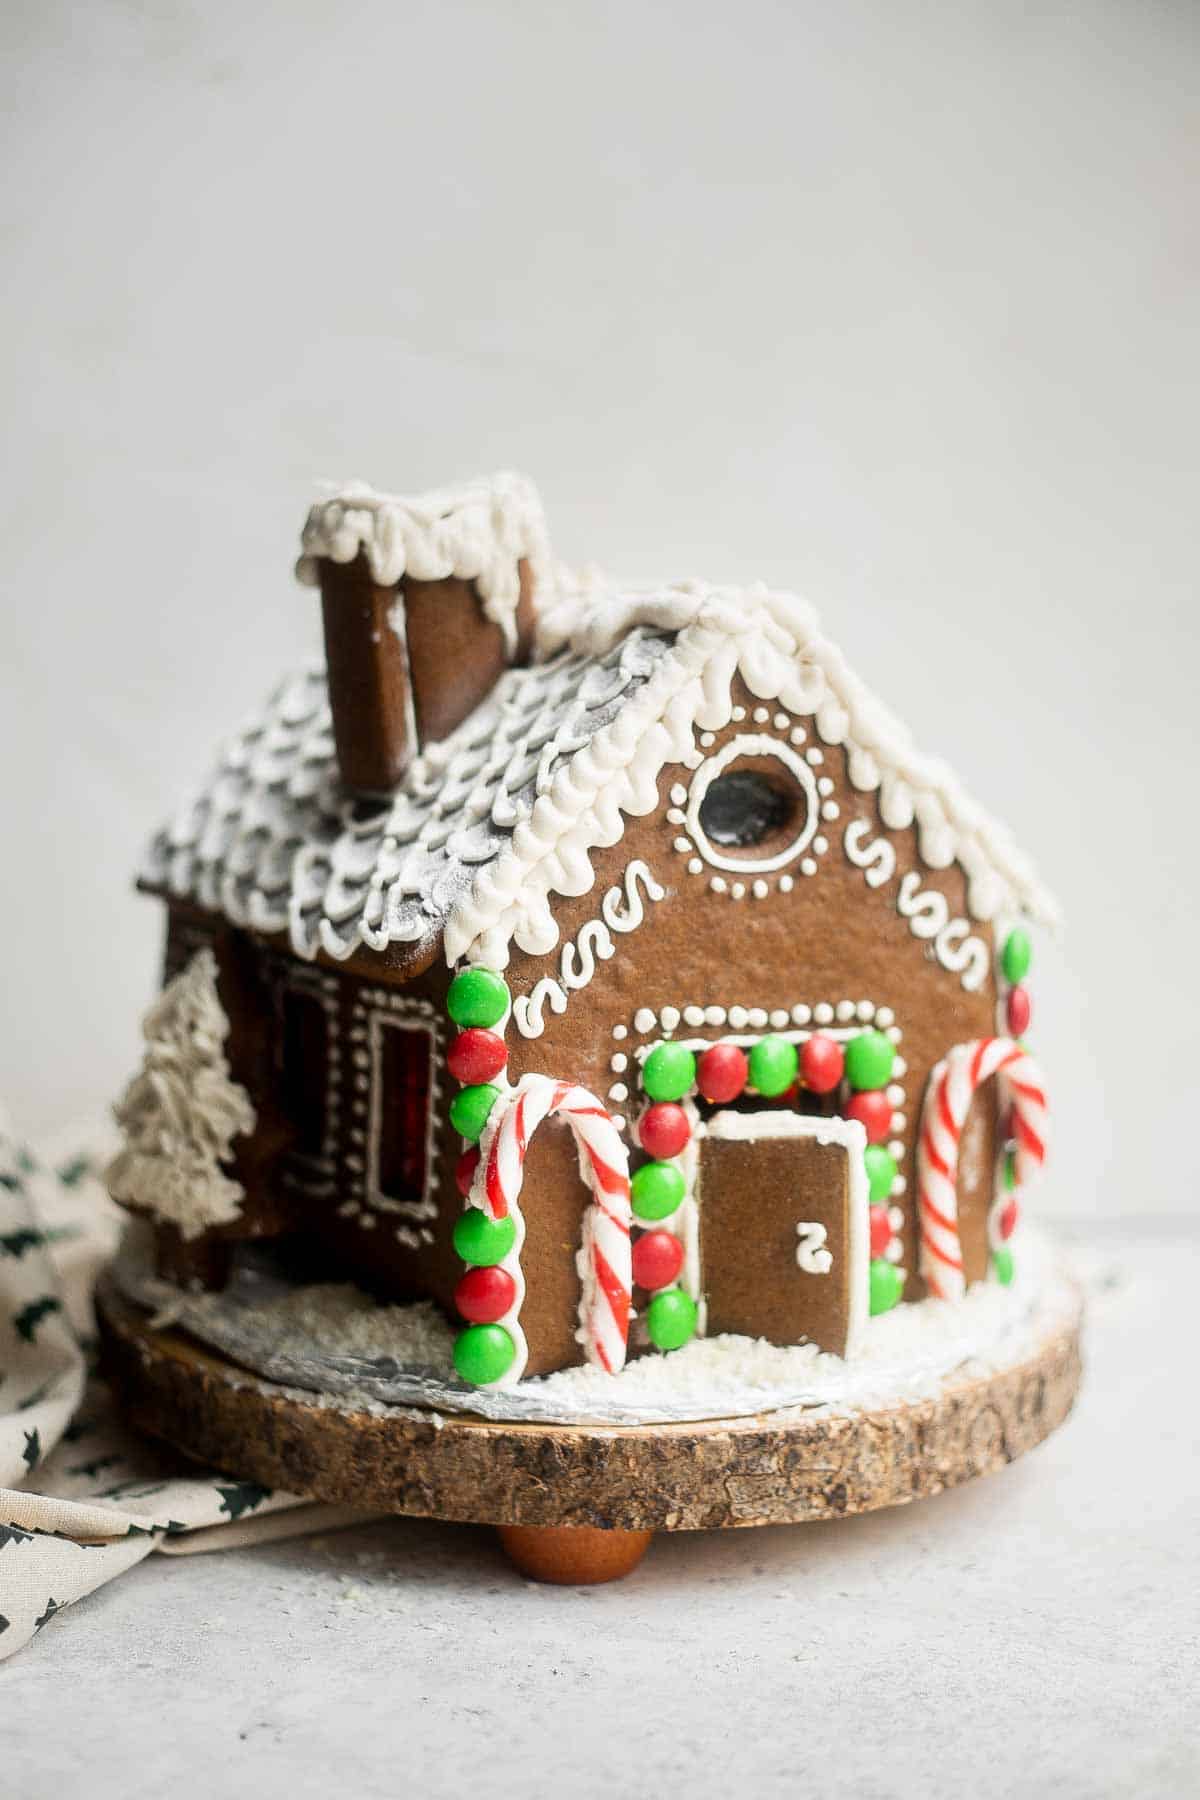 Gingerbread House Gingerbread Cake - festive Christmas dessert